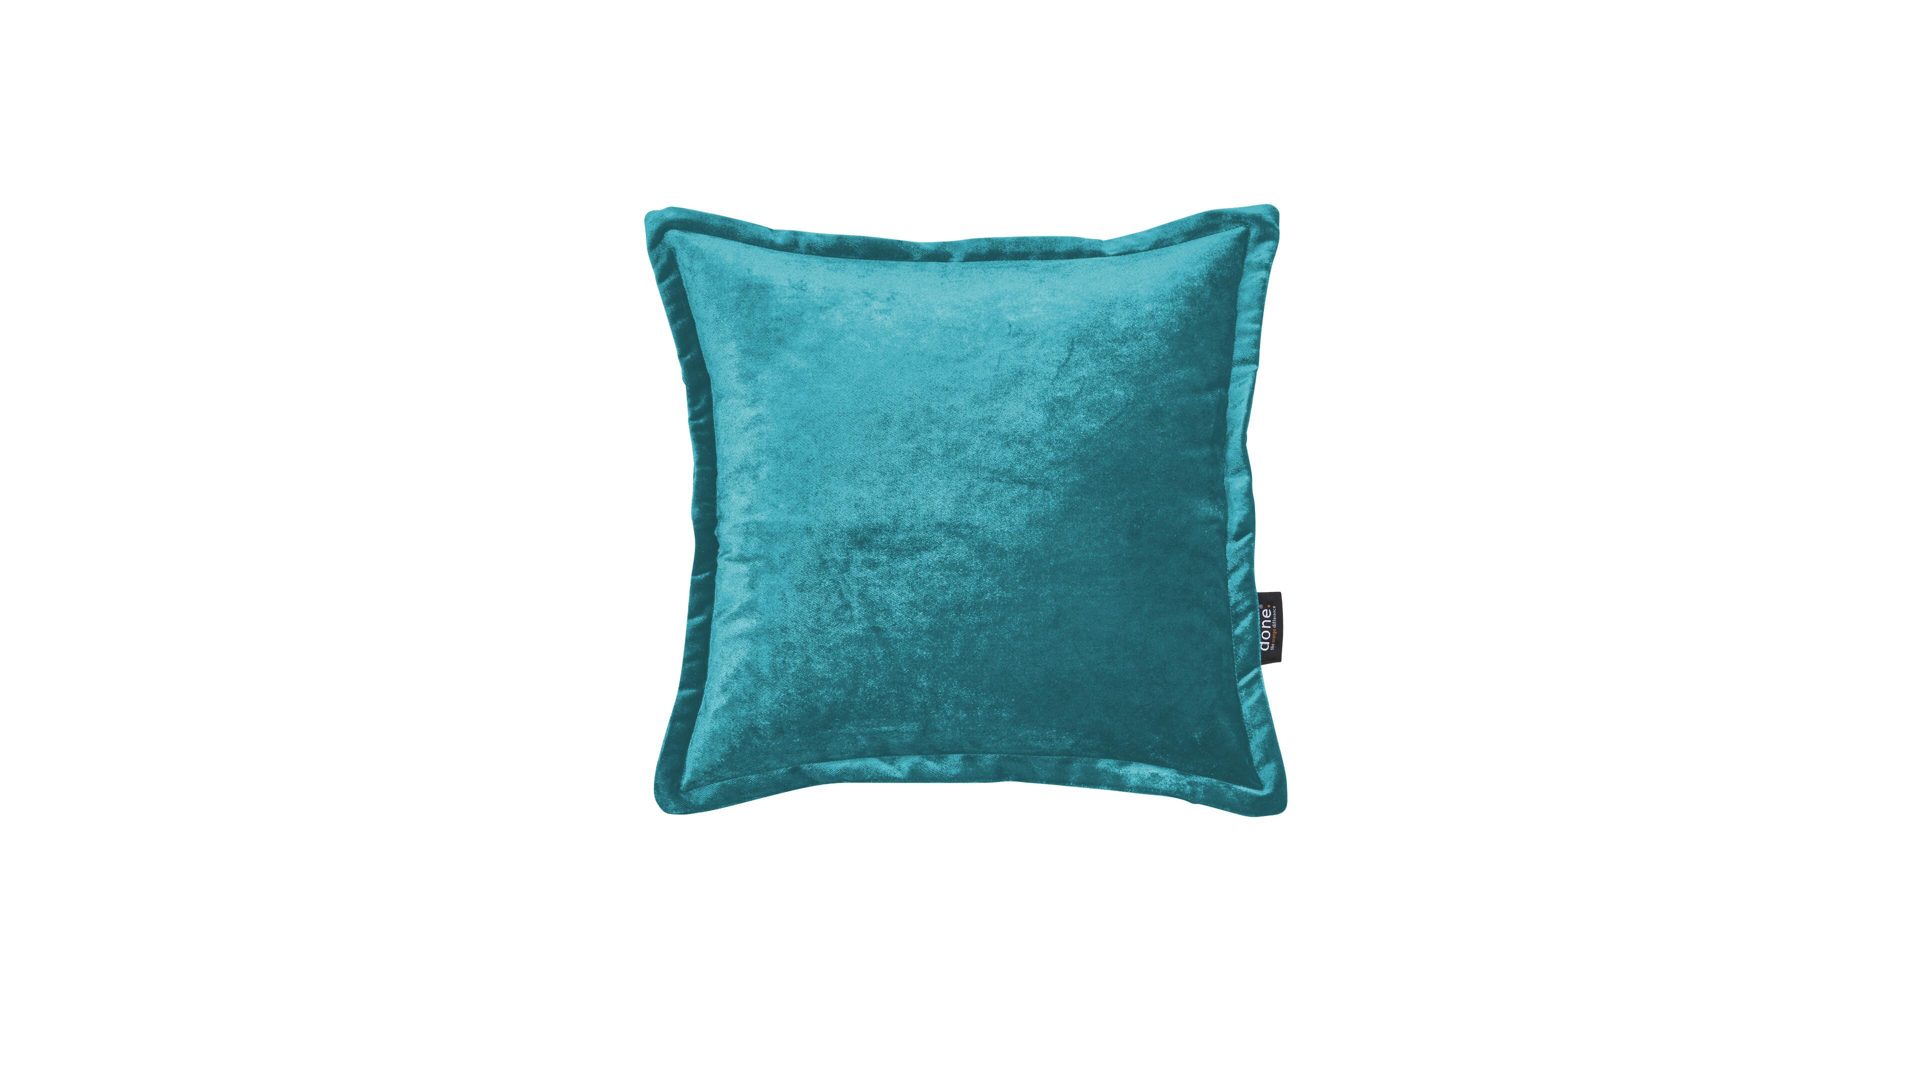 Kissenbezug /-hülle Done by karabel home company aus Stoff in Blau Done Kissenhülle Cushion Glam aquafarbener Samt - ca. 45 x 45 cm